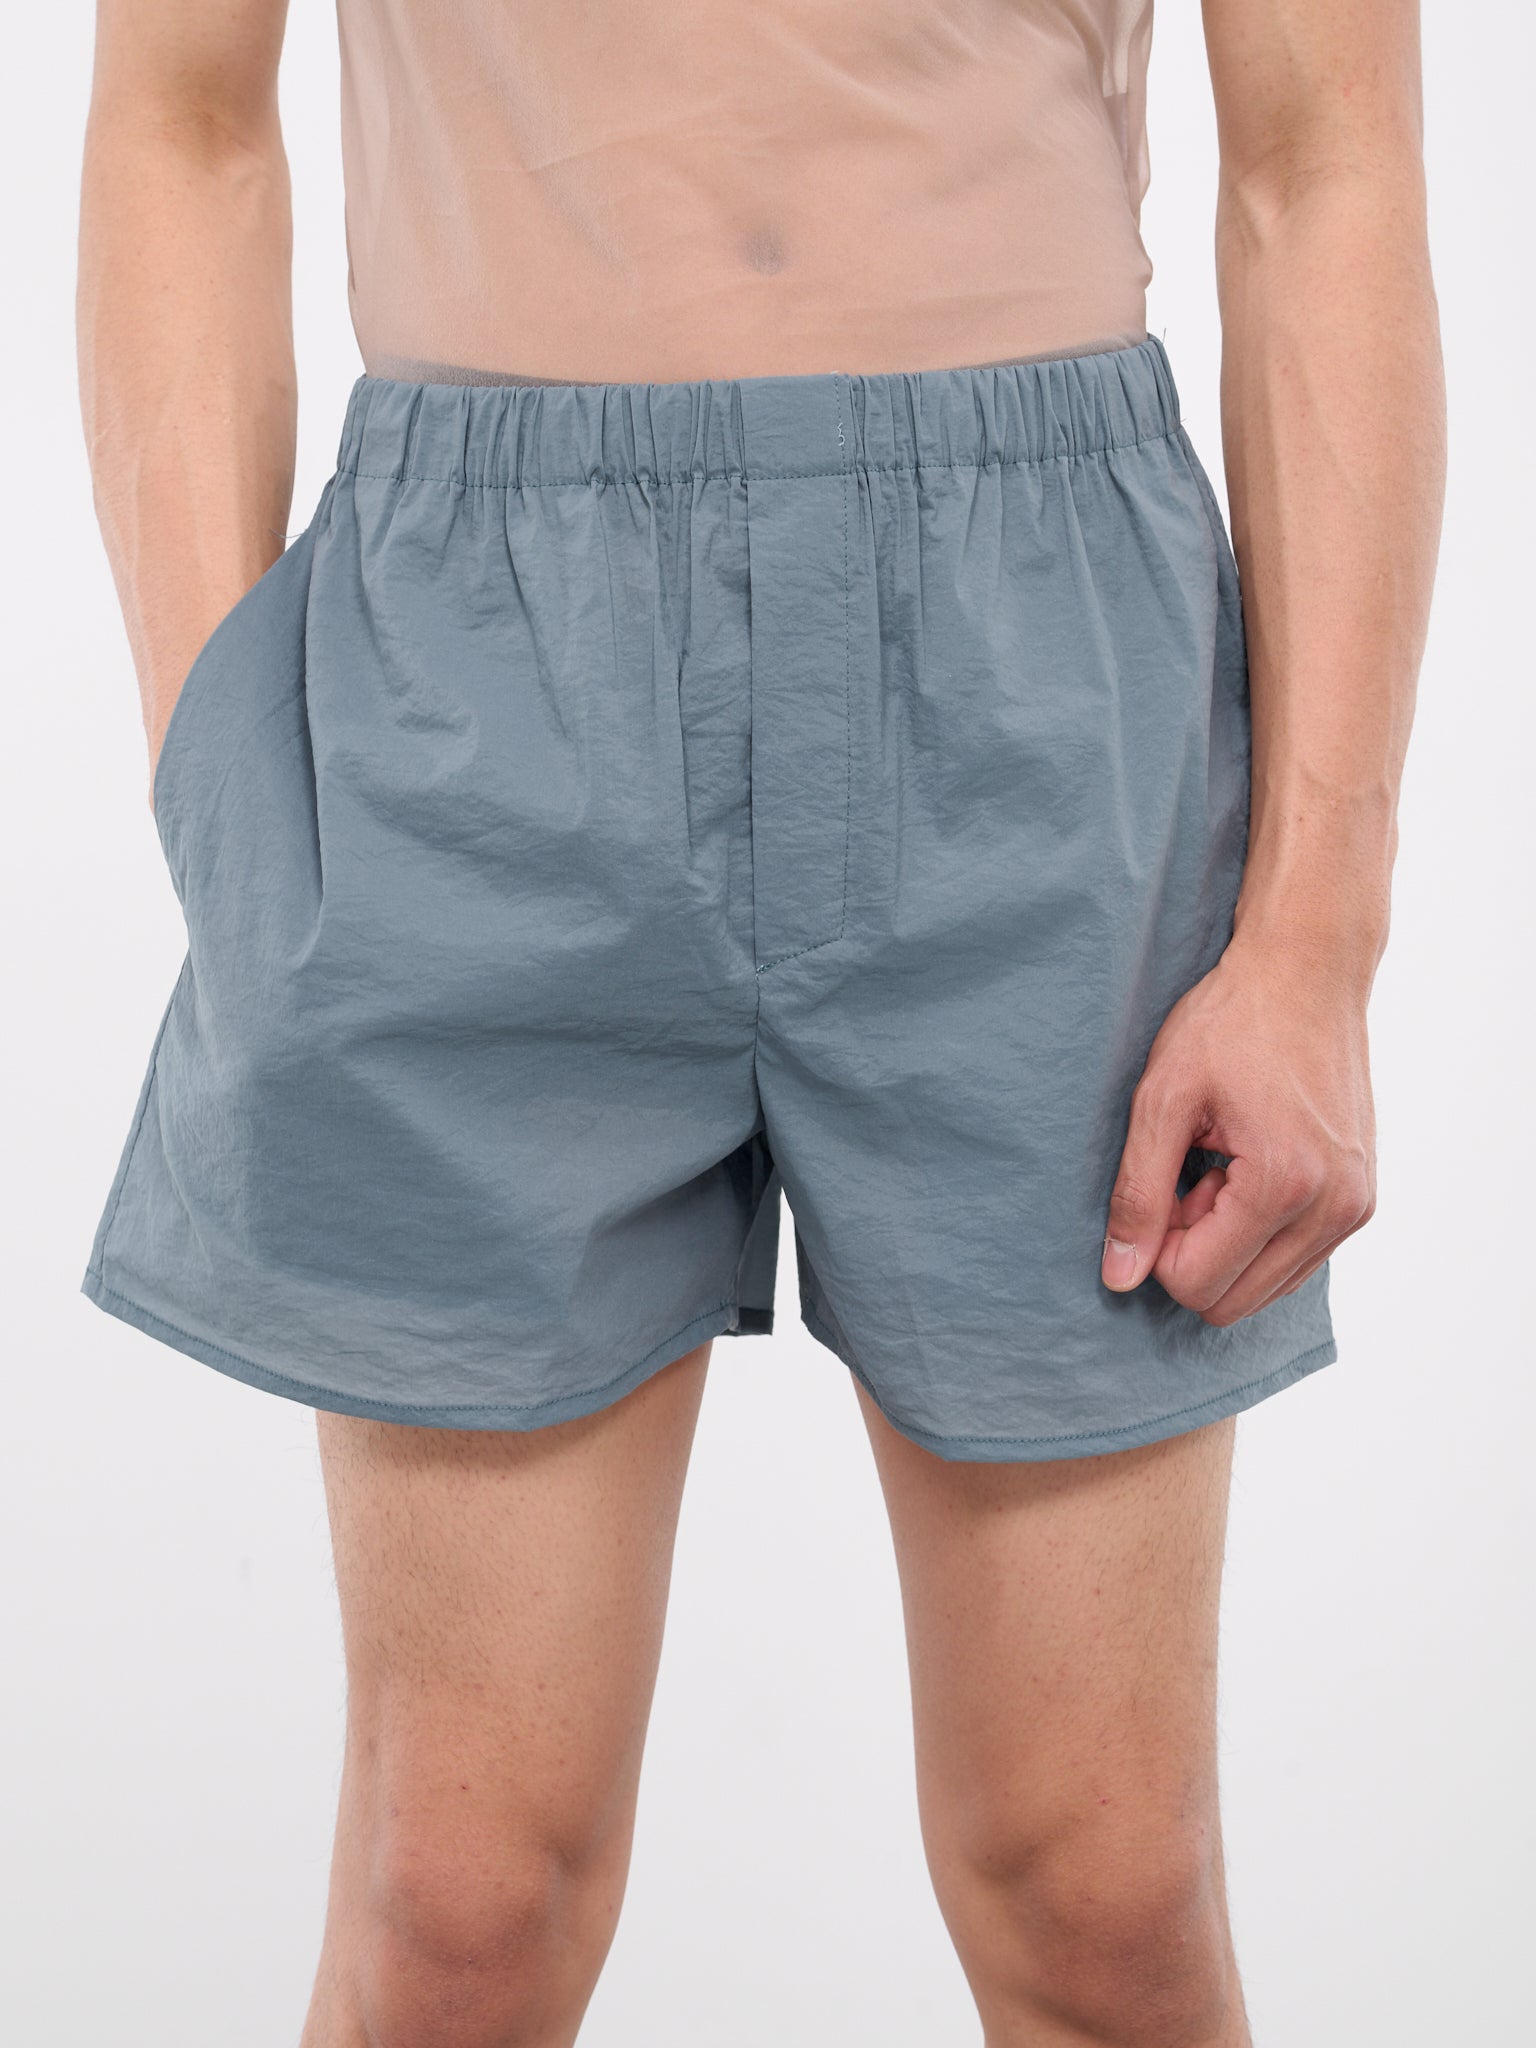 Boxer Shorts (CO-ST001-M-PA0001-POOL-BLUE)